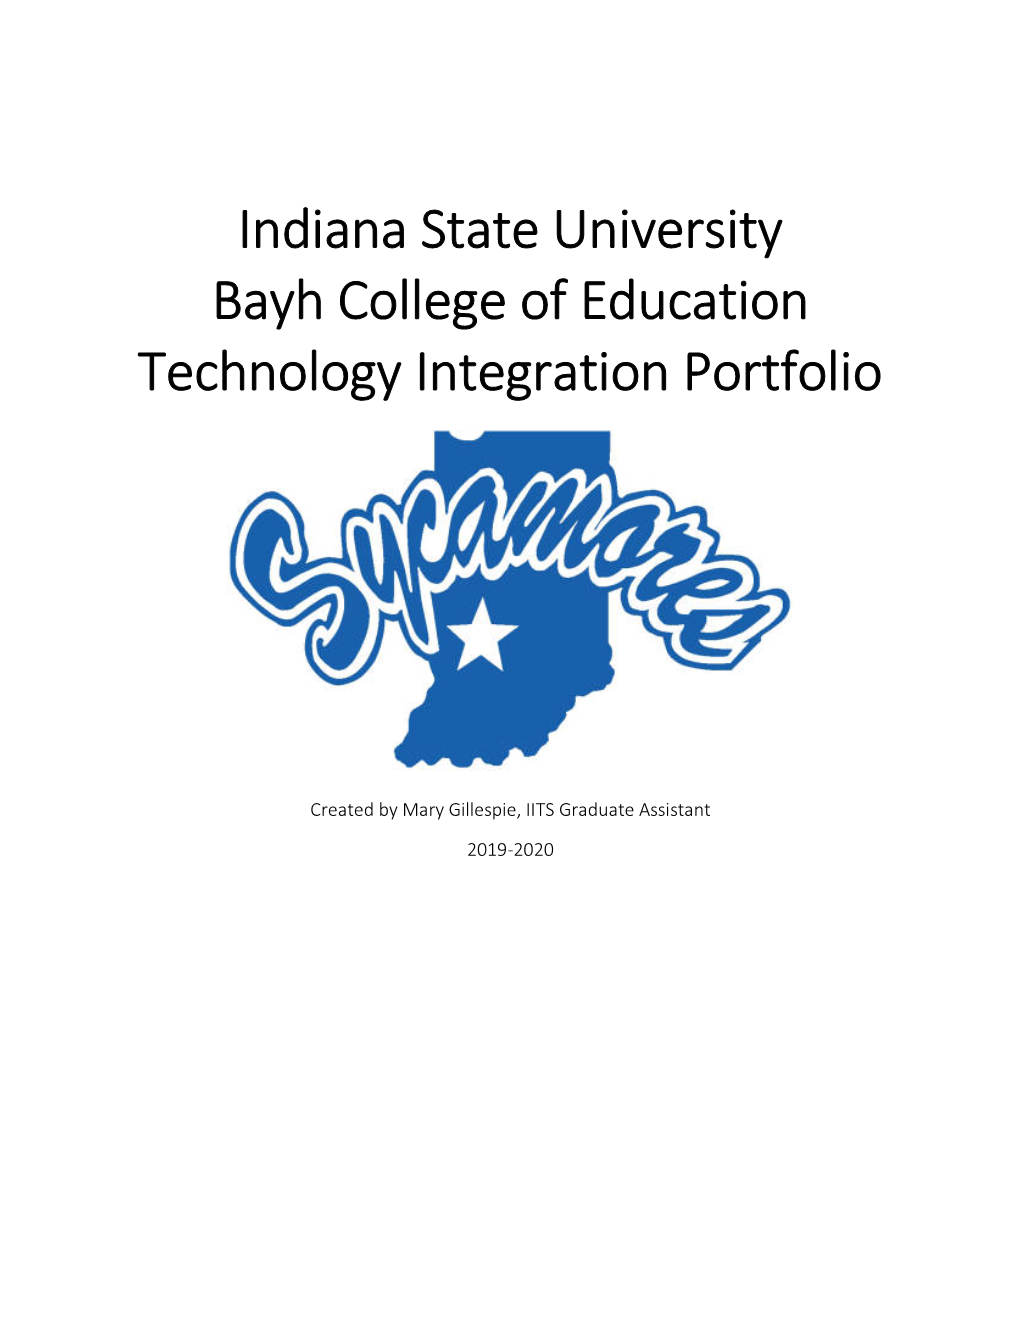 Technology Integration Portfolio